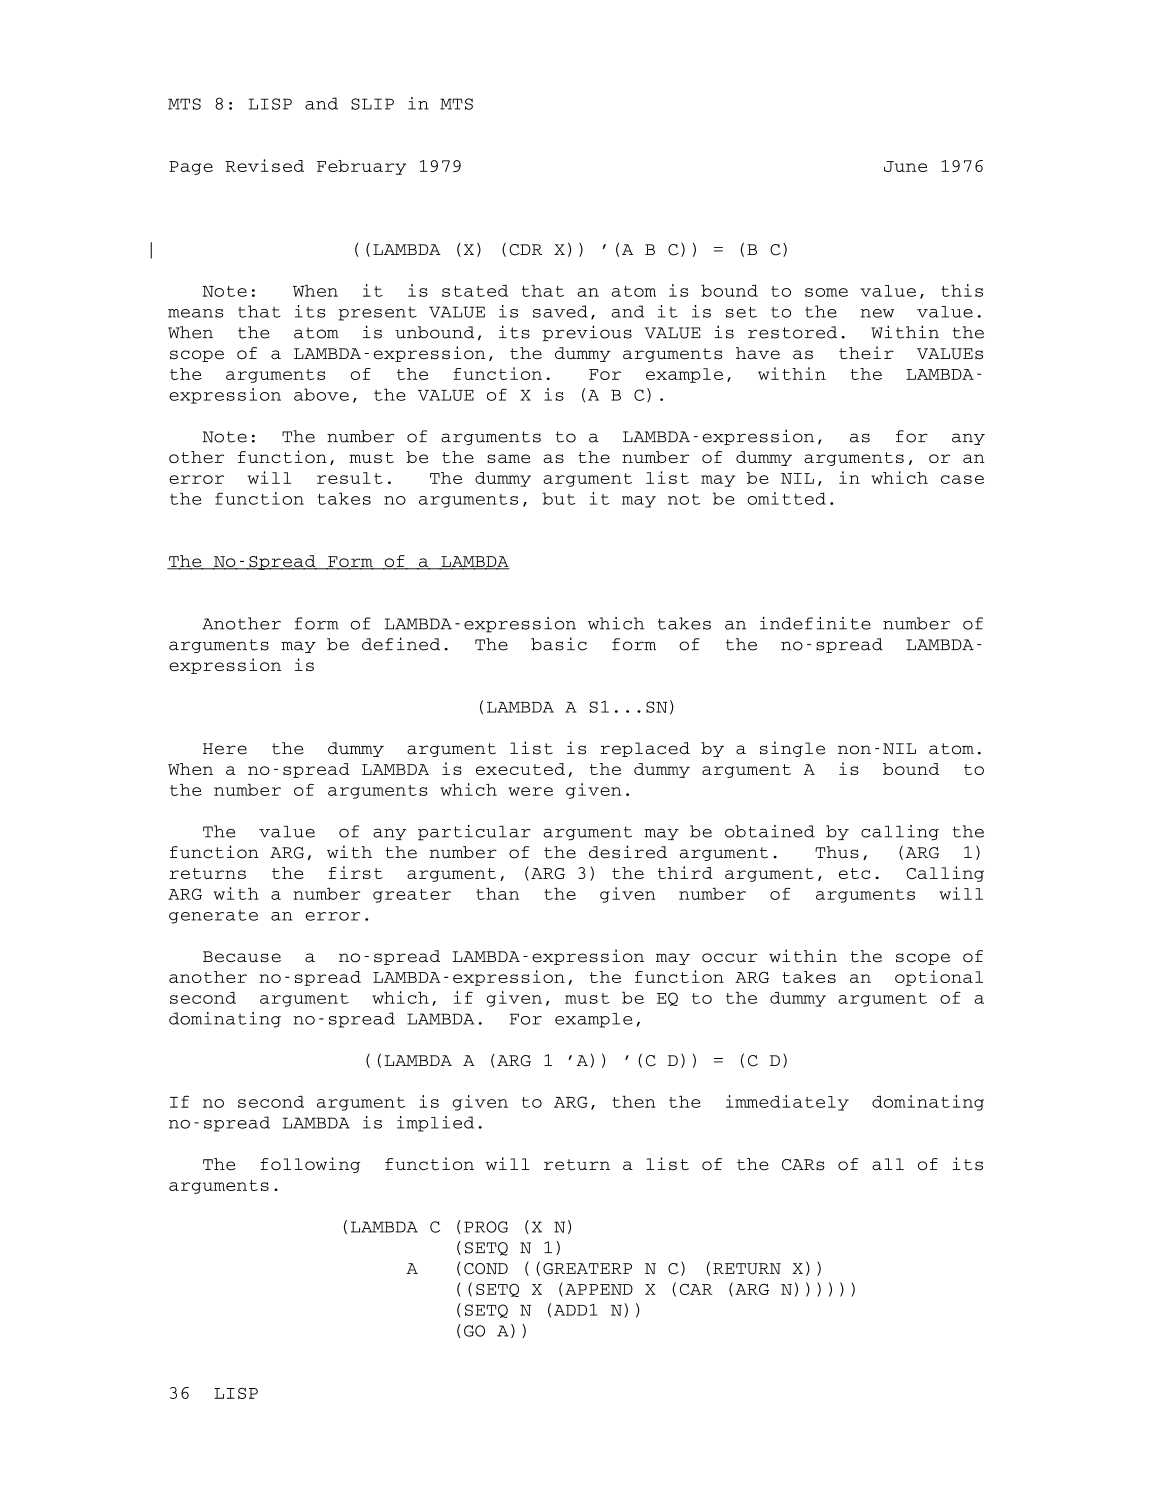 MTS Volume 8 - LISP and SLIP page 36